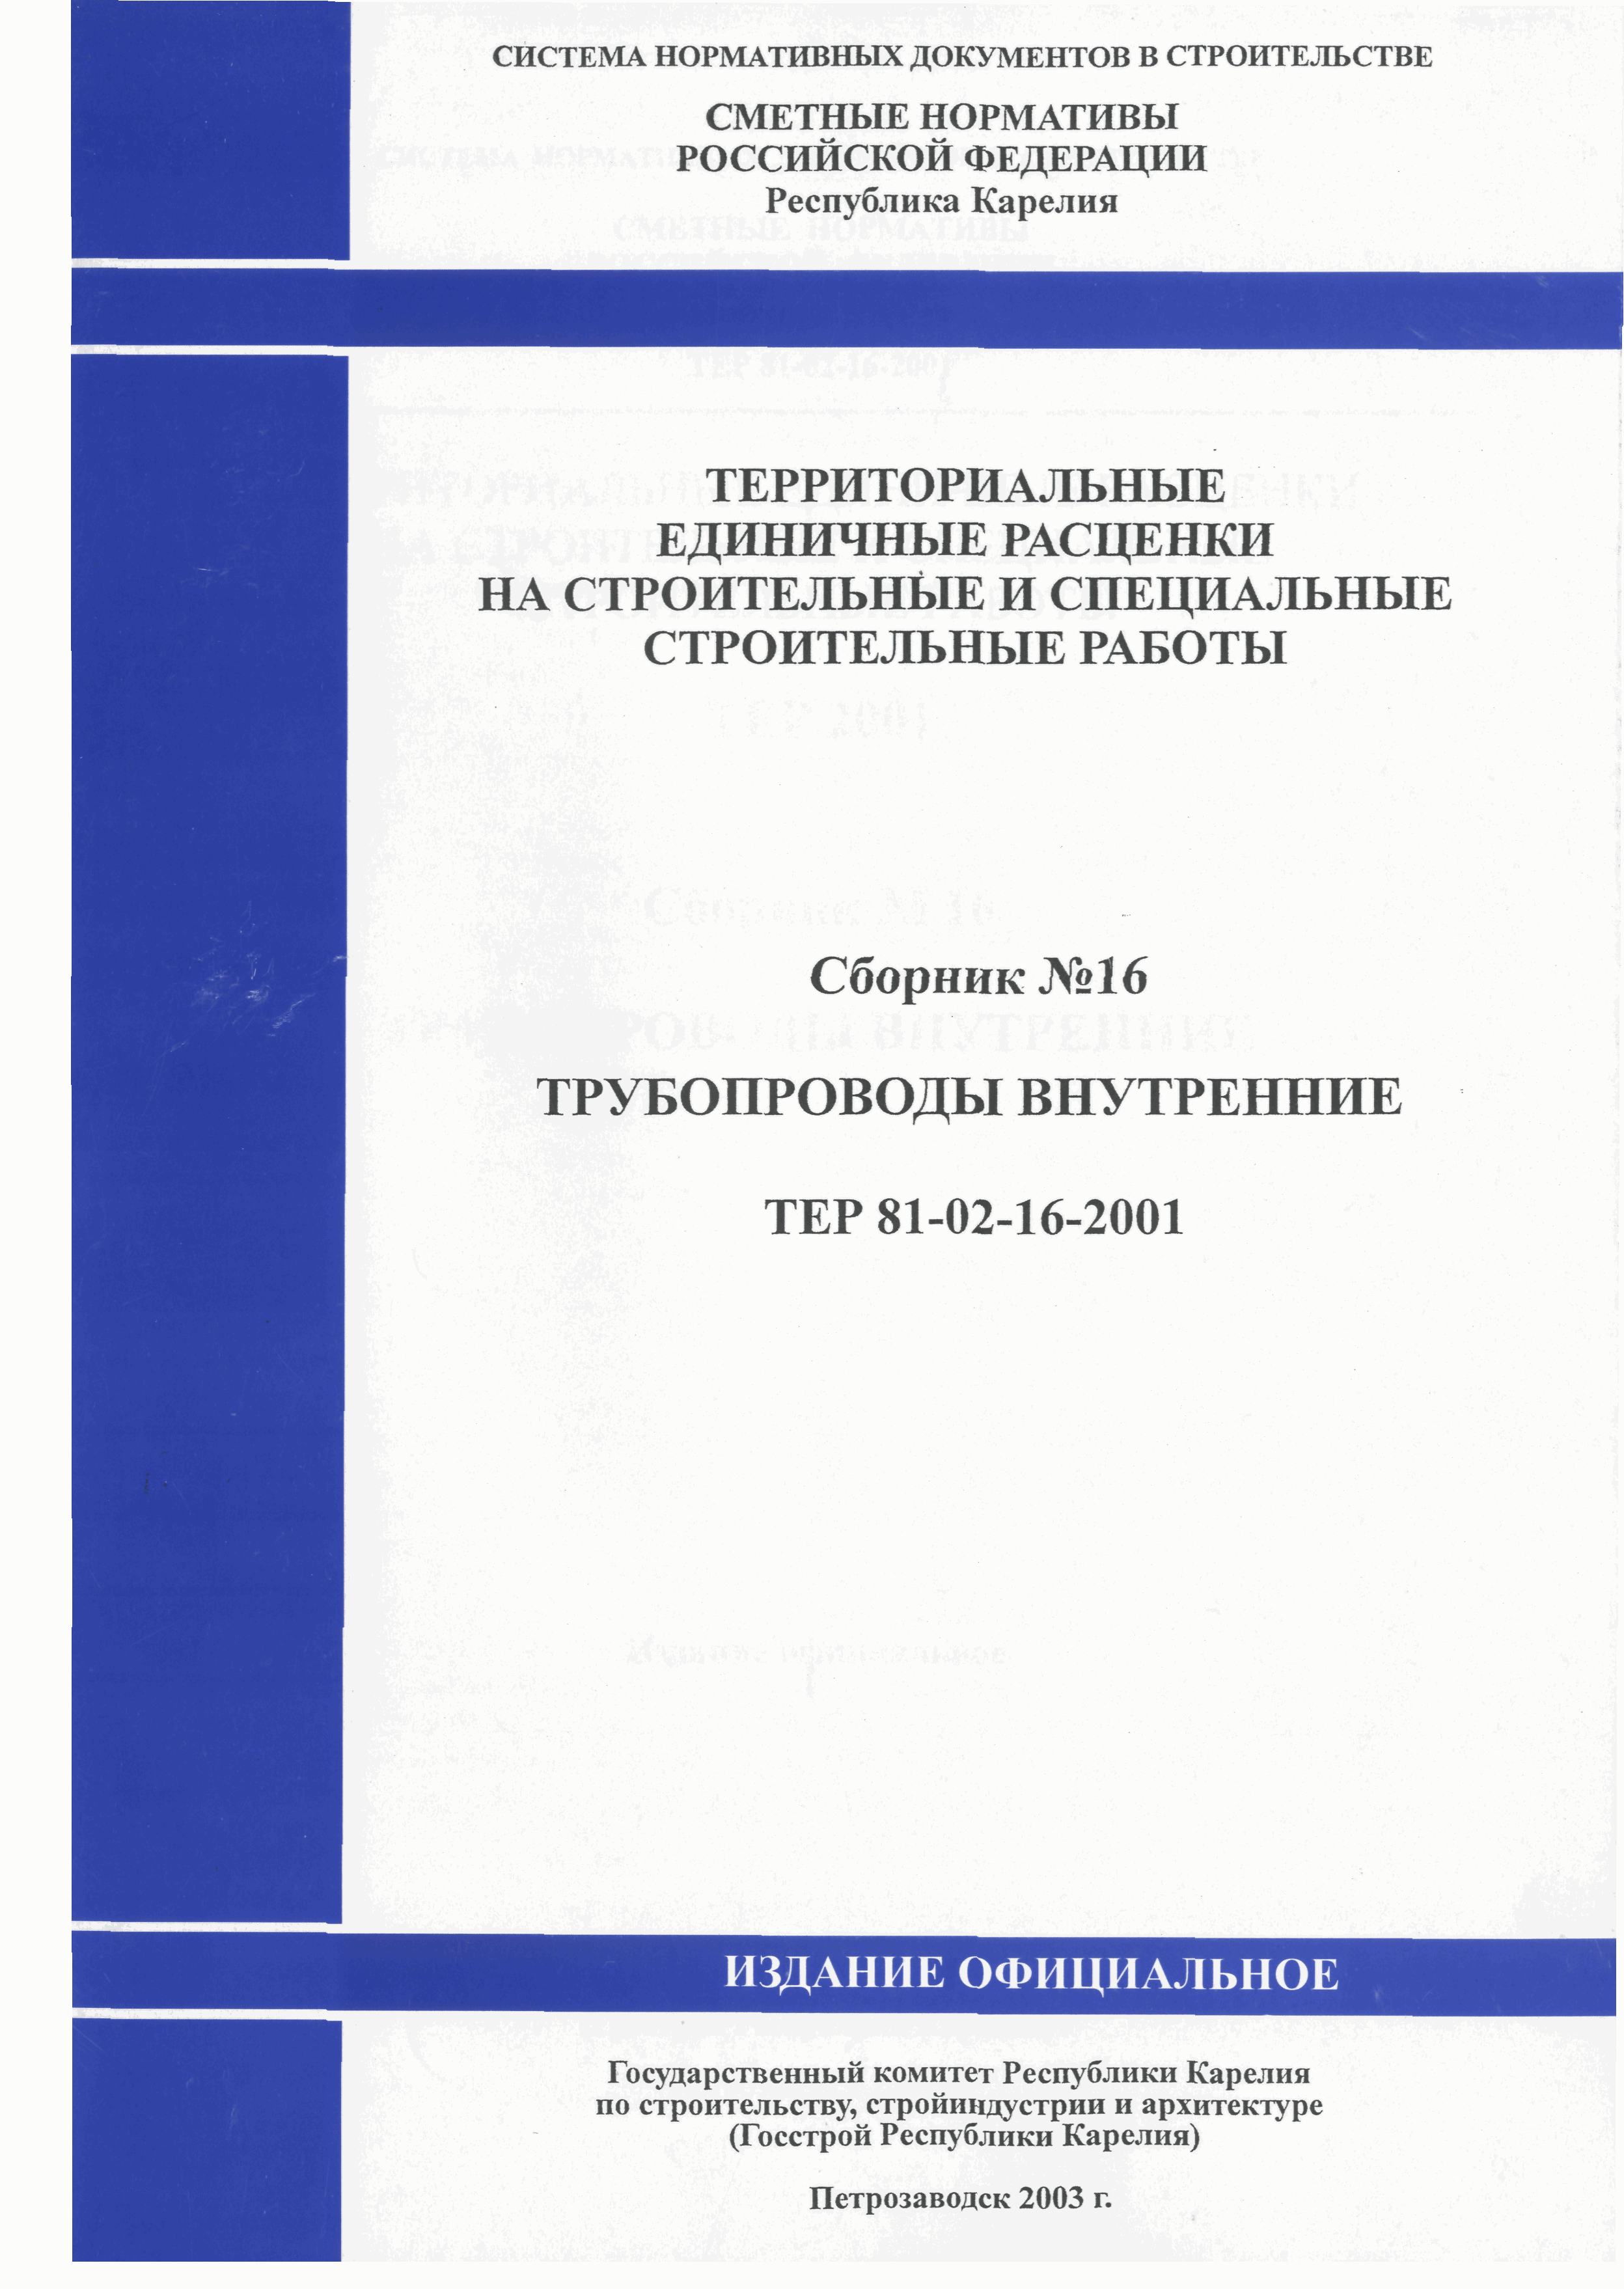 ТЕР Республика Карелия 2001-16